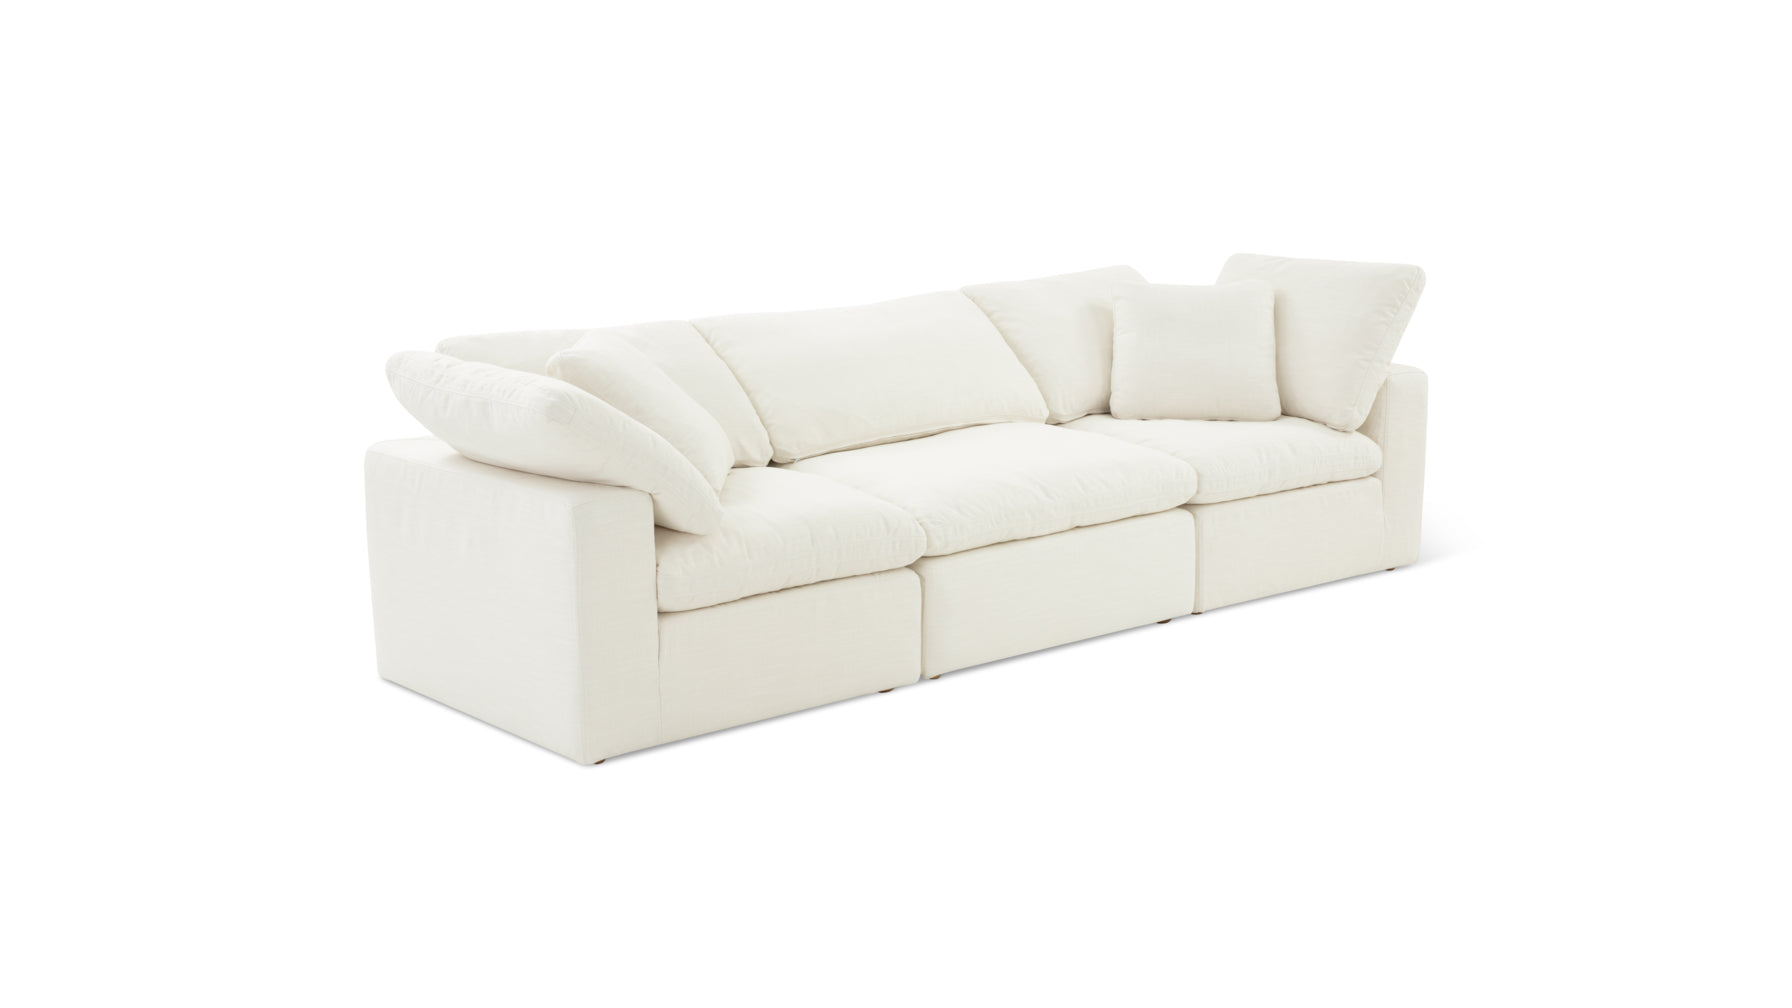 Movie Night™ 3-Piece Modular Sofa, Standard, Cream Linen - Image 7